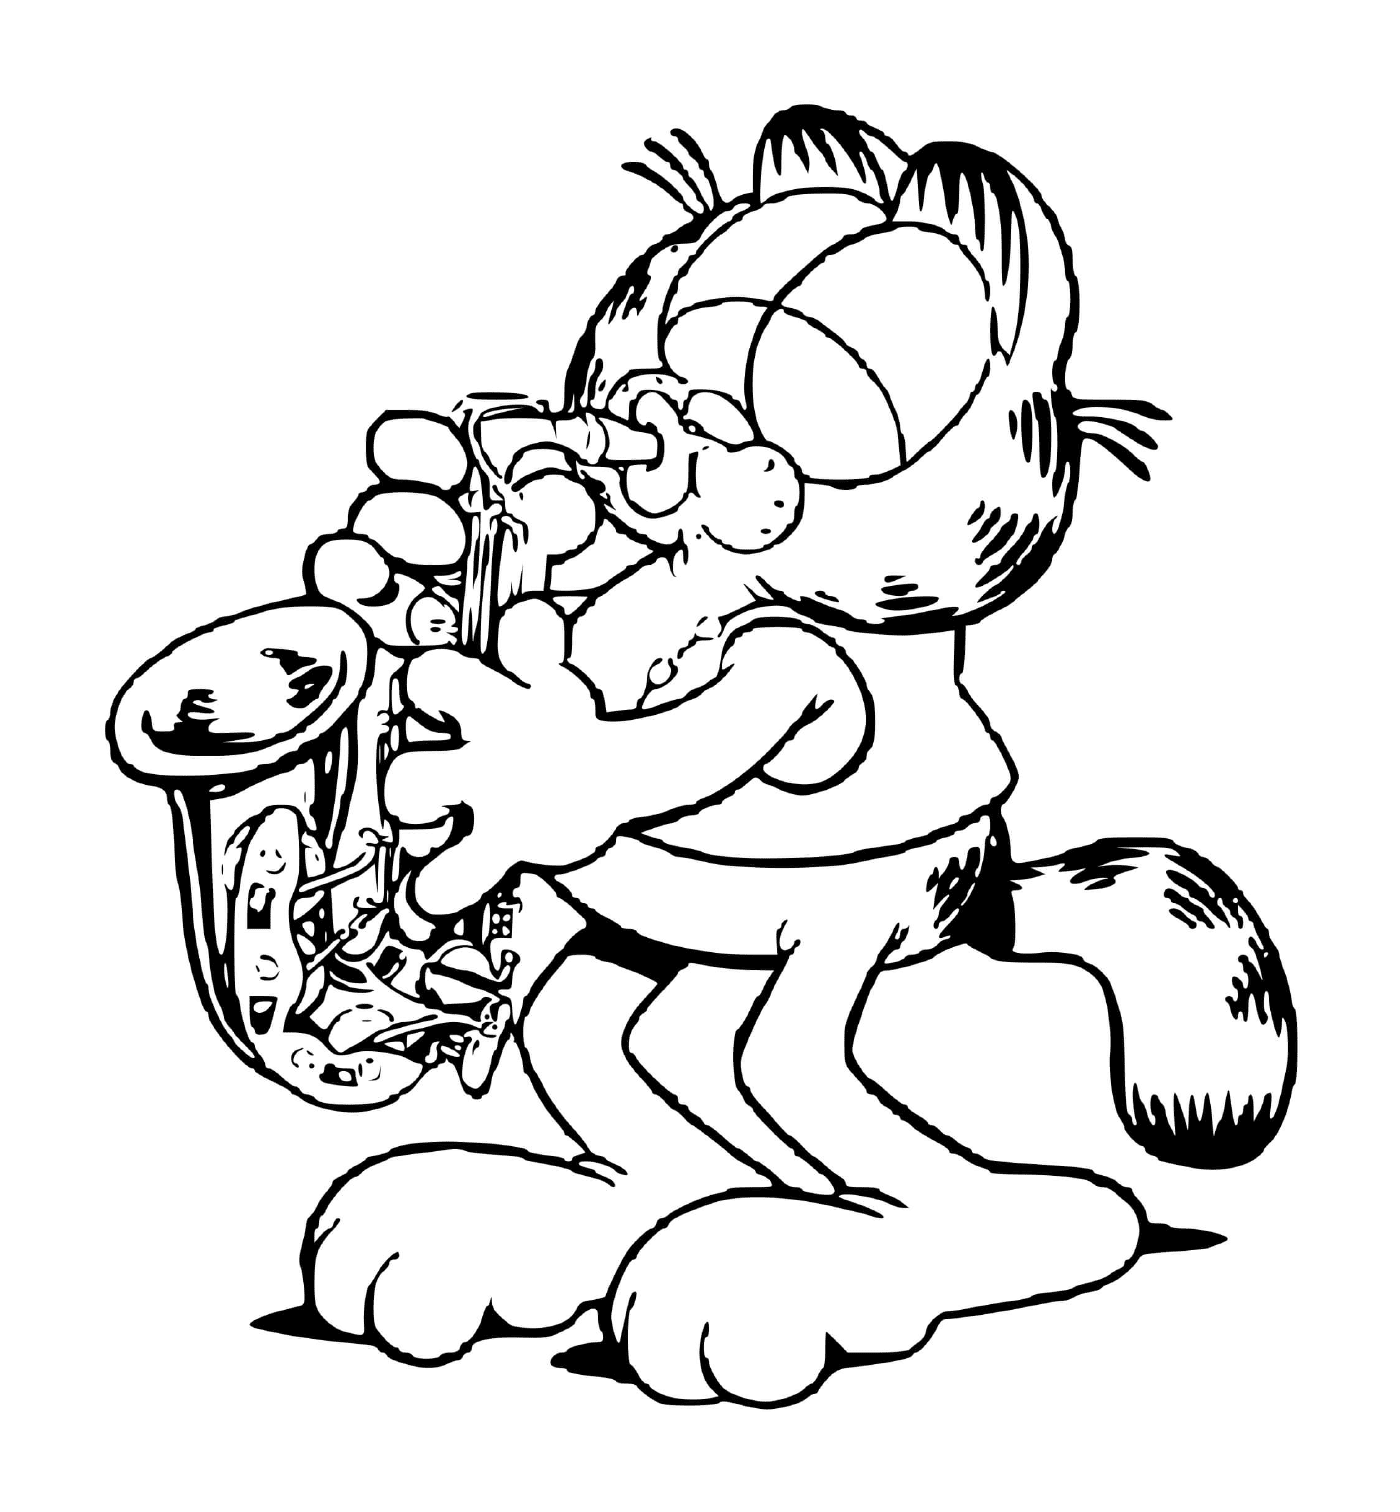  Garfield plays the saxophone 